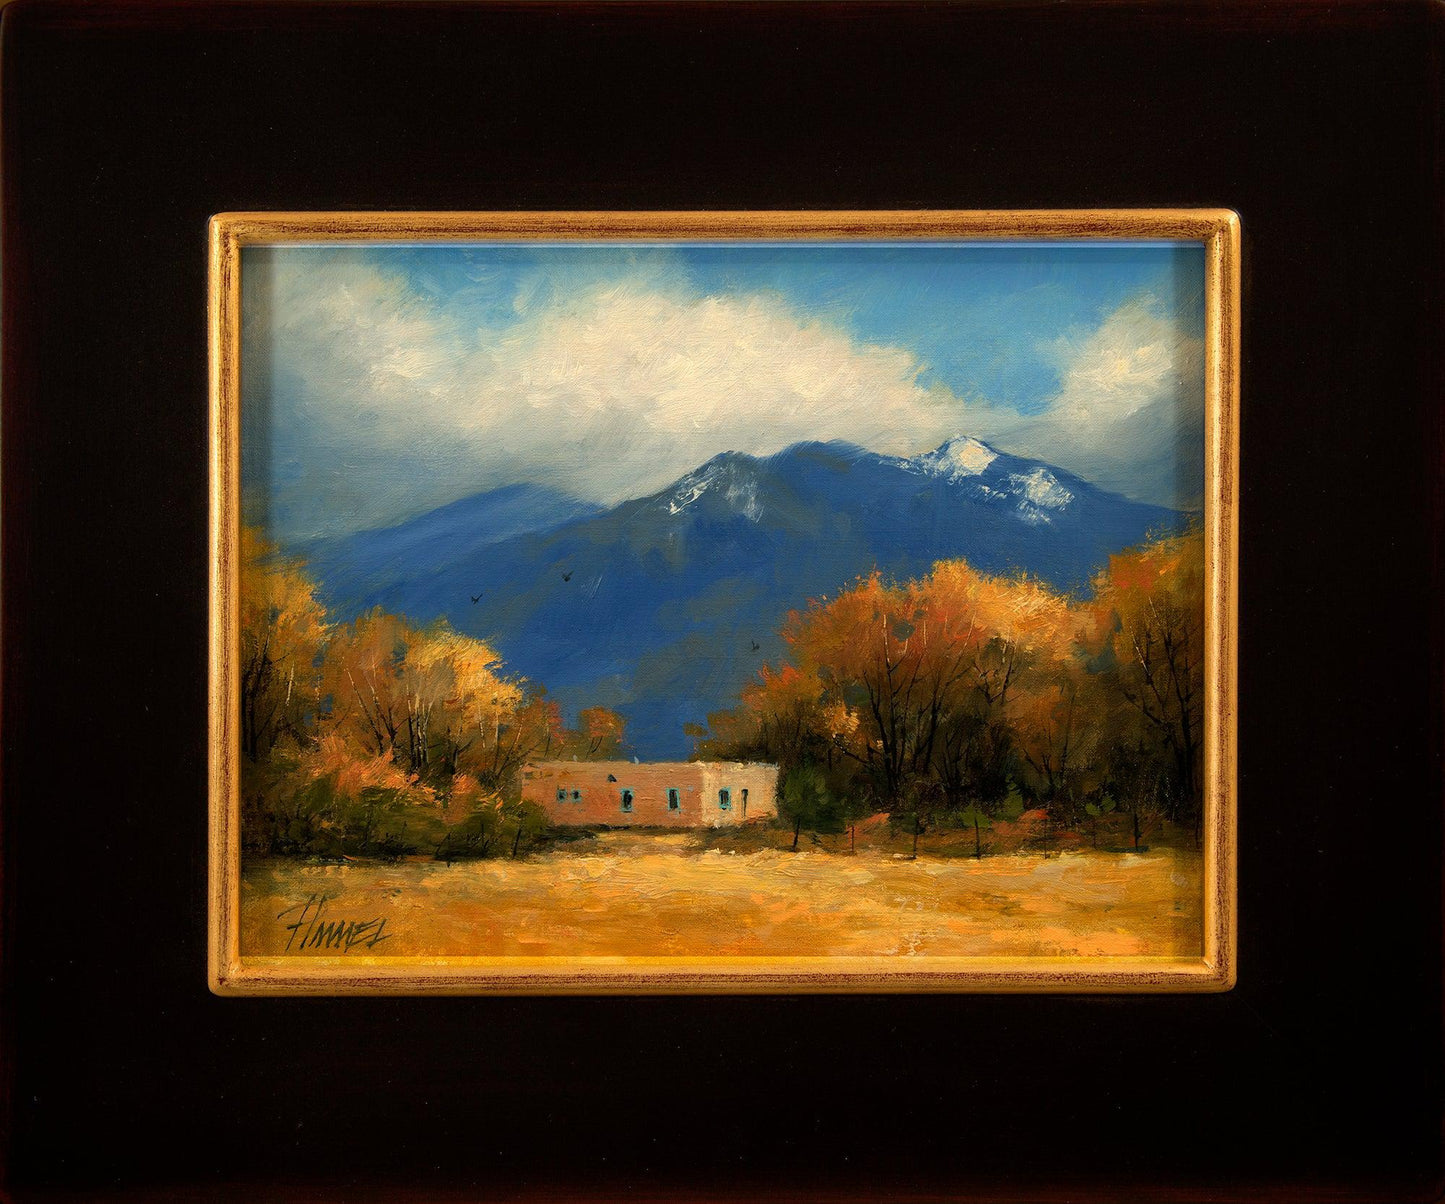 Taos Dreams-Painting-Peggy Immel-Sorrel Sky Gallery